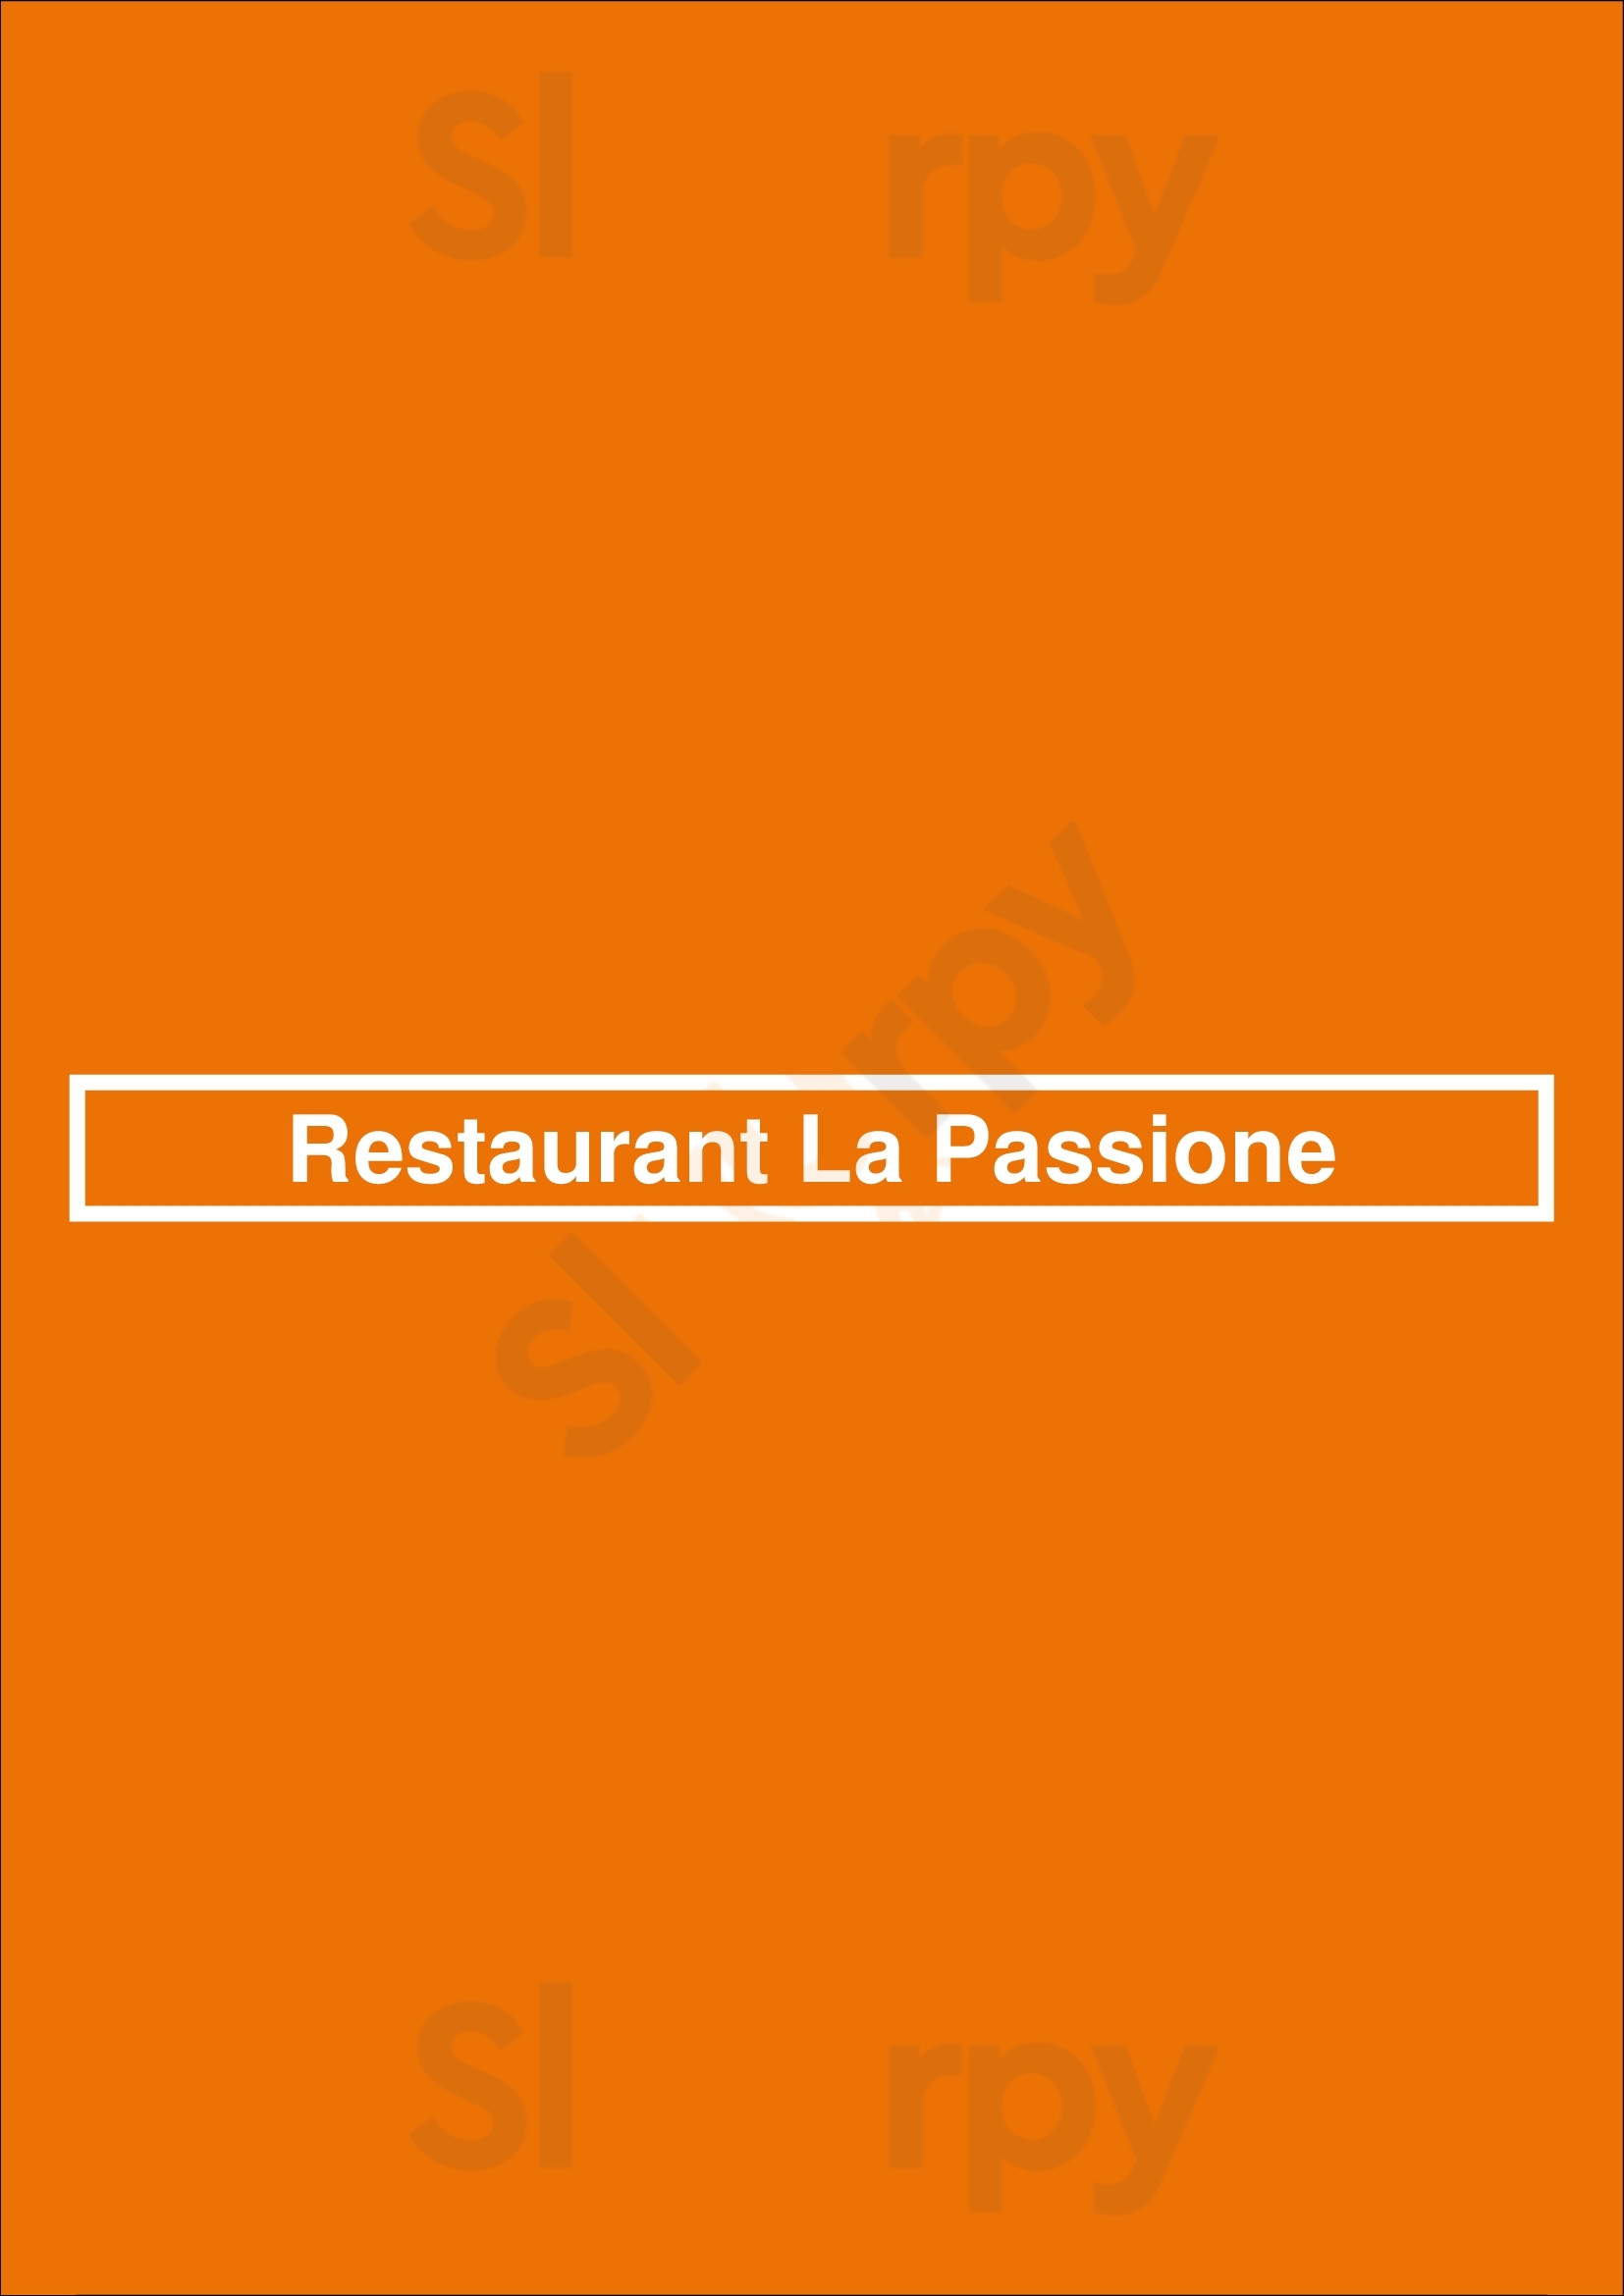 Restaurant La Passione Den Haag Menu - 1